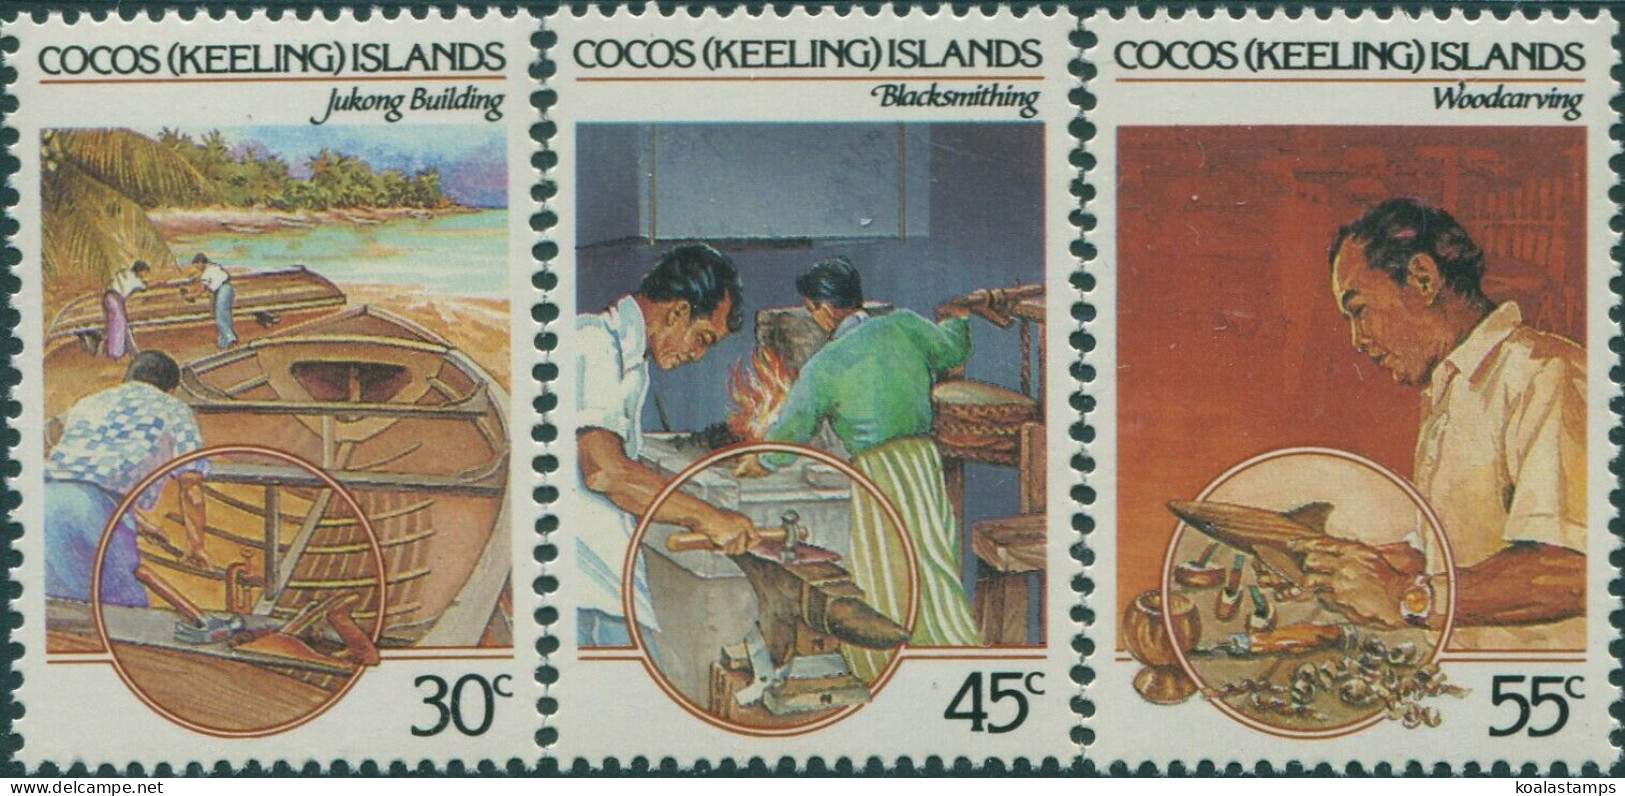 Cocos Islands 1985 SG126-128 Malay Culture Set MLH - Kokosinseln (Keeling Islands)